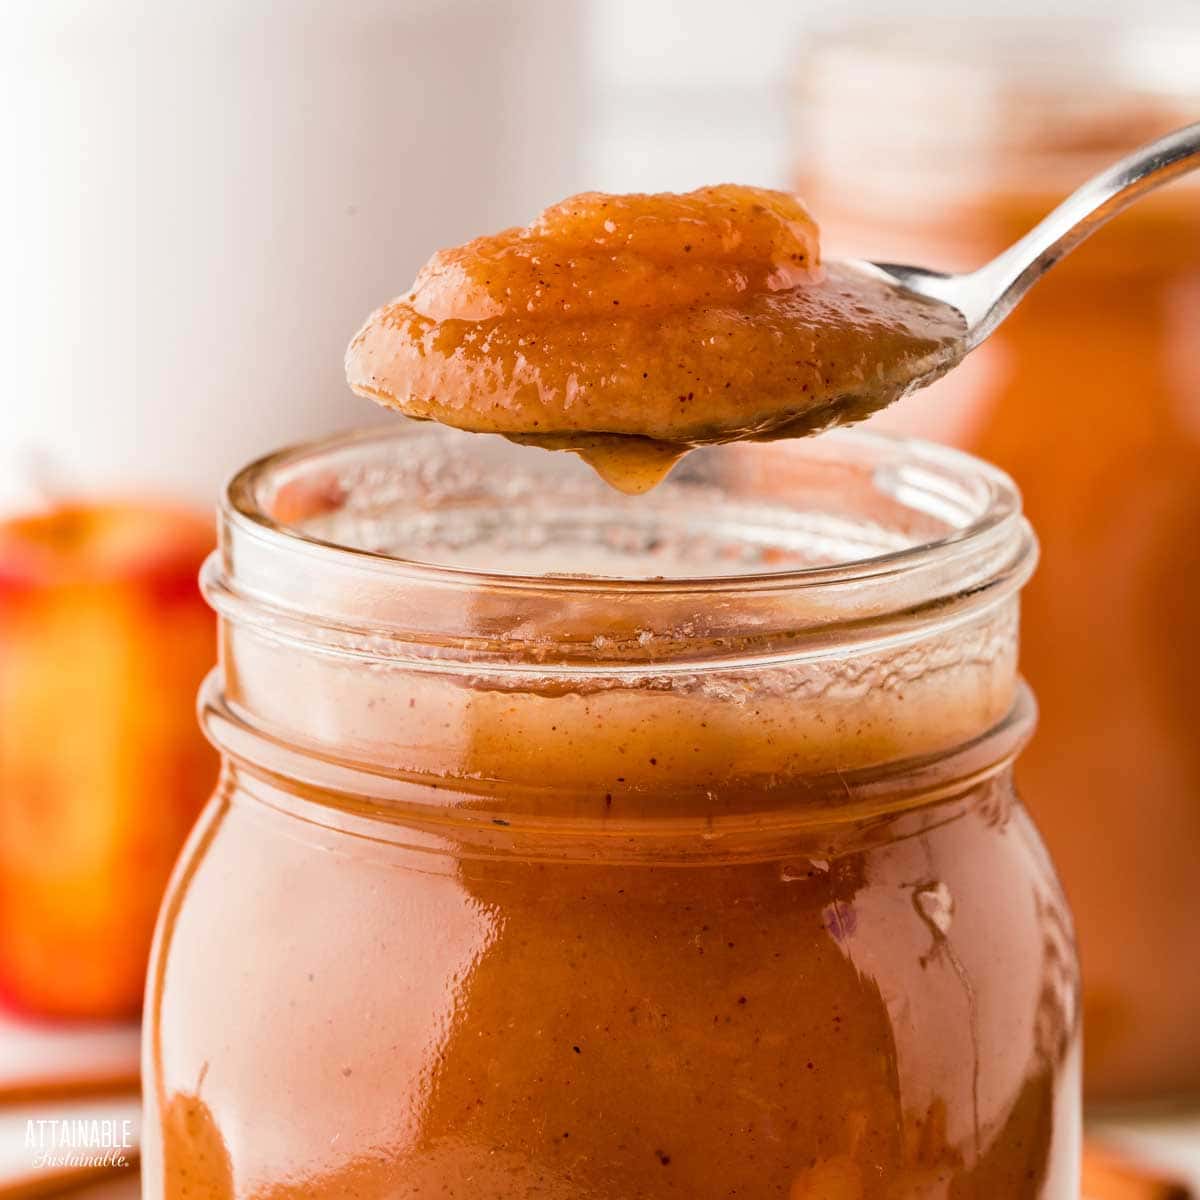 Spoon full of apple butter over an open jar.